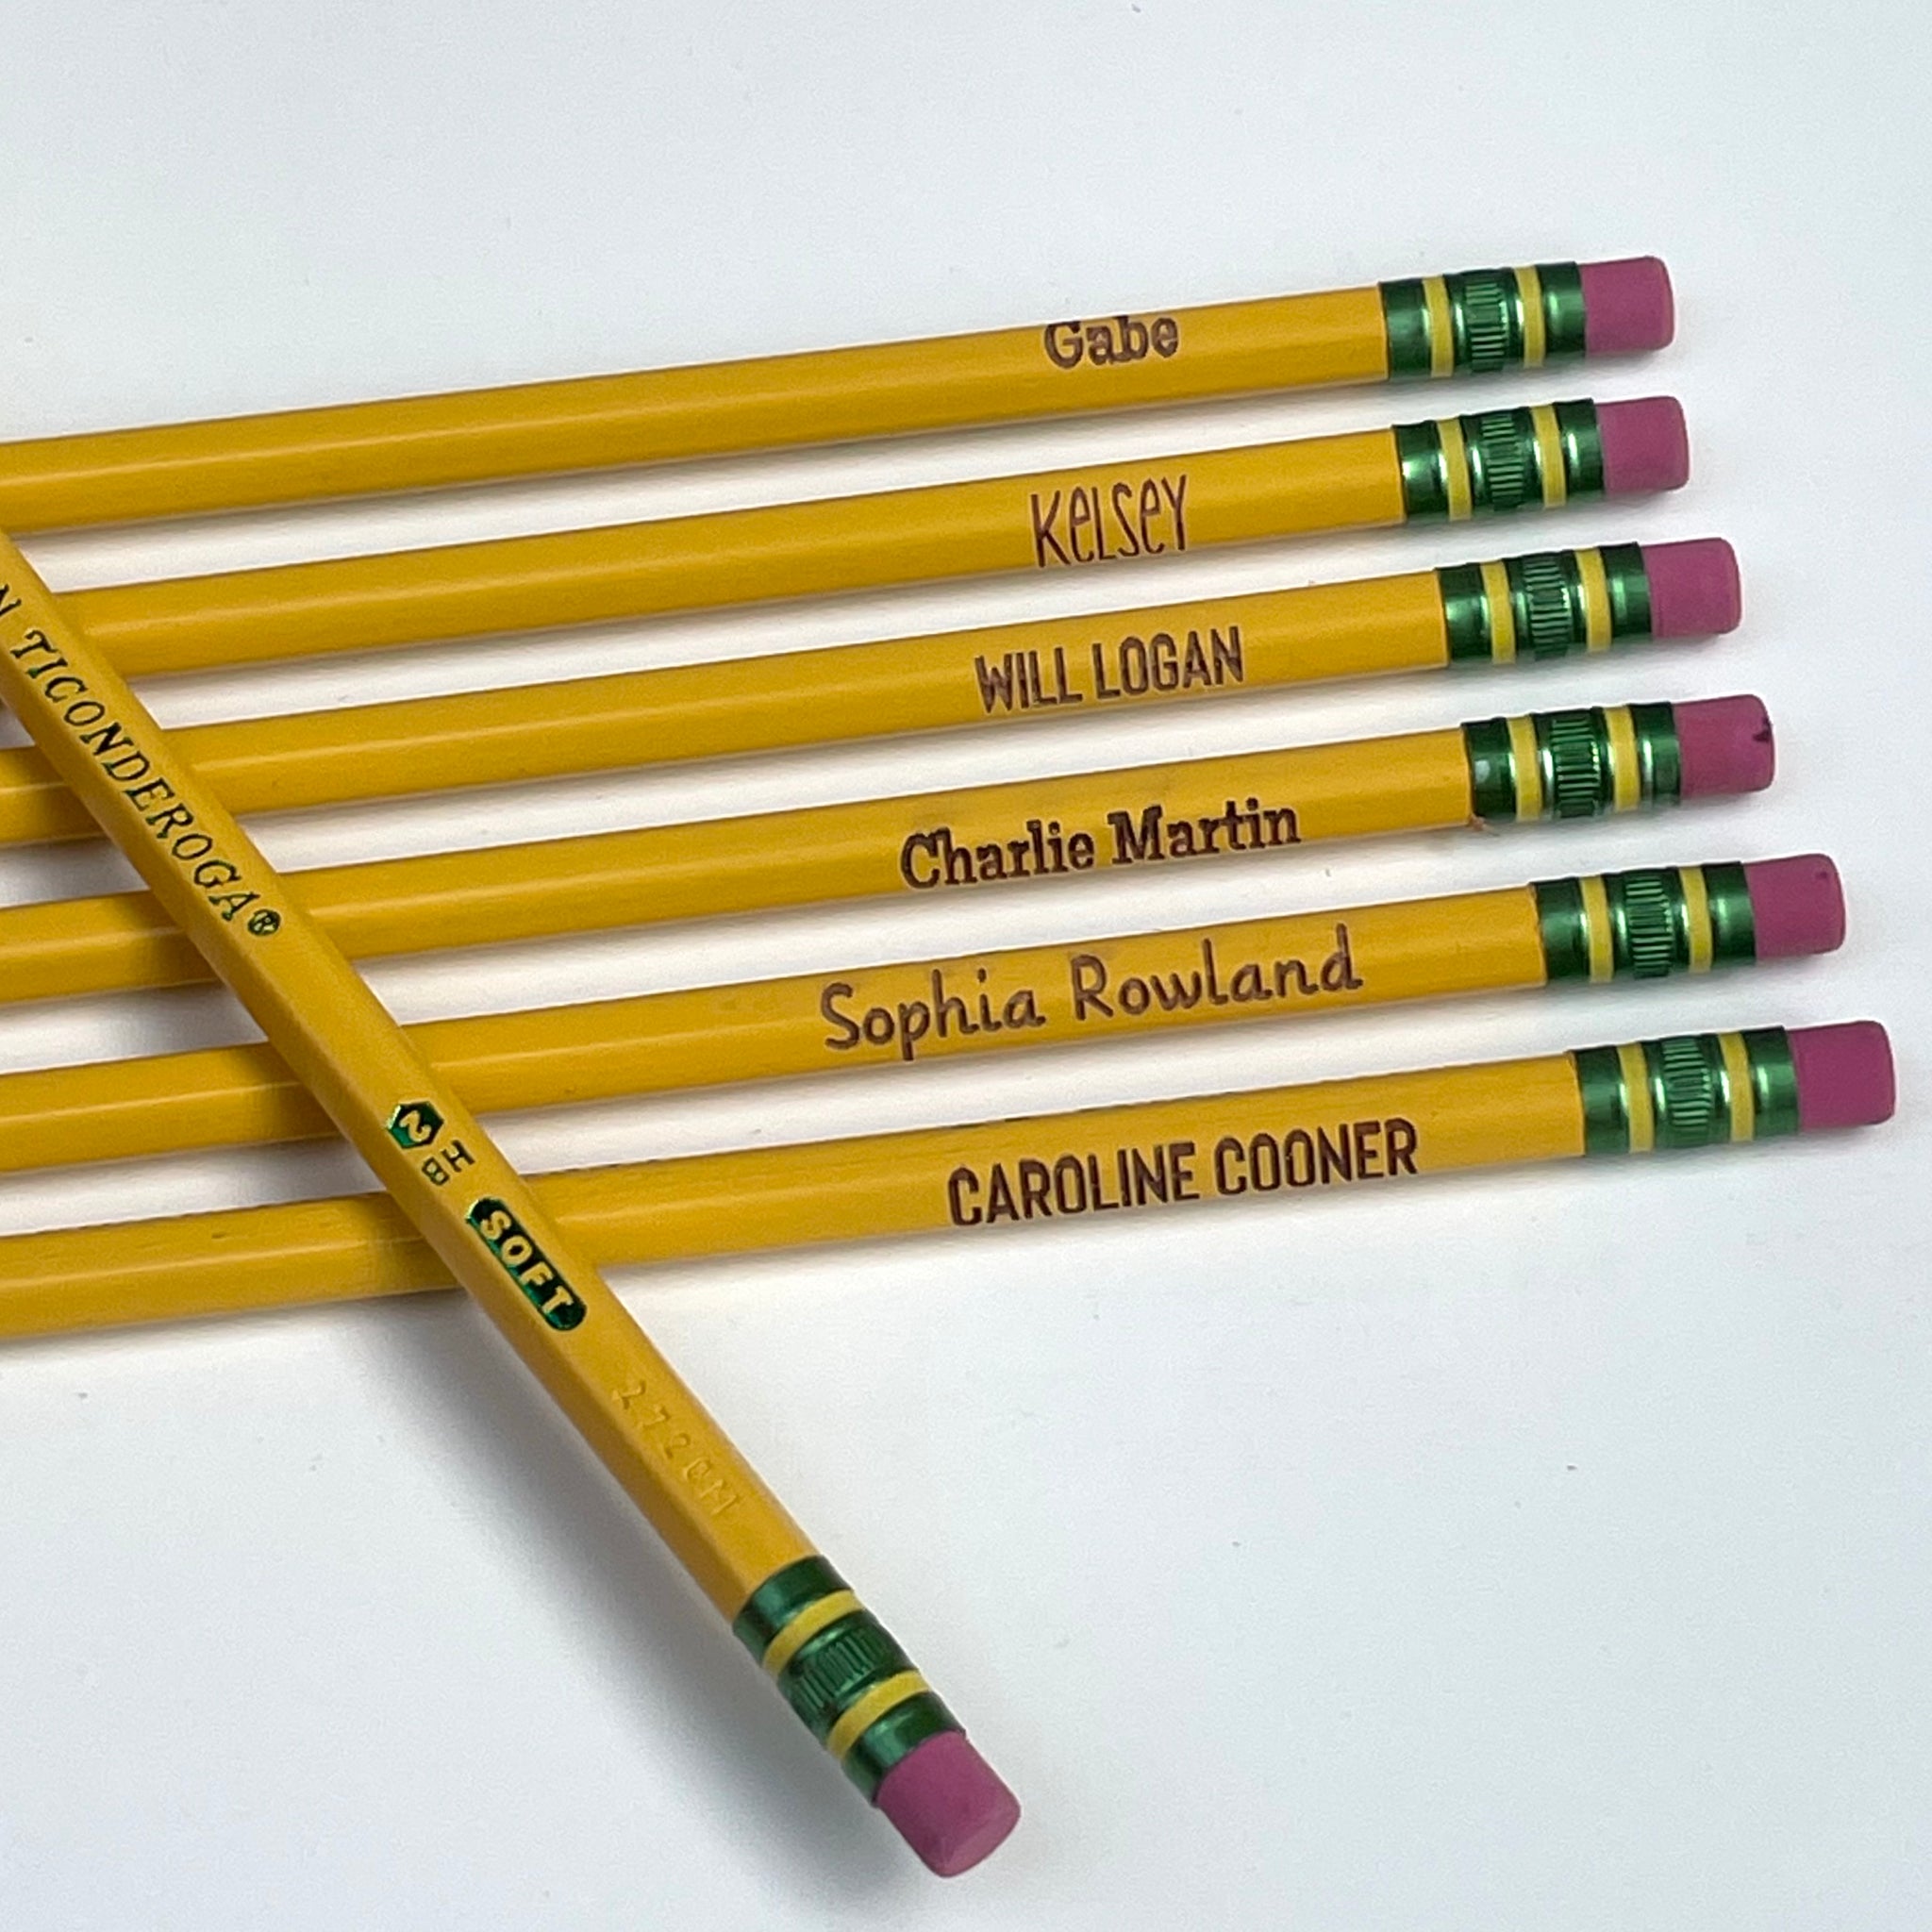 Personalizing Pencils